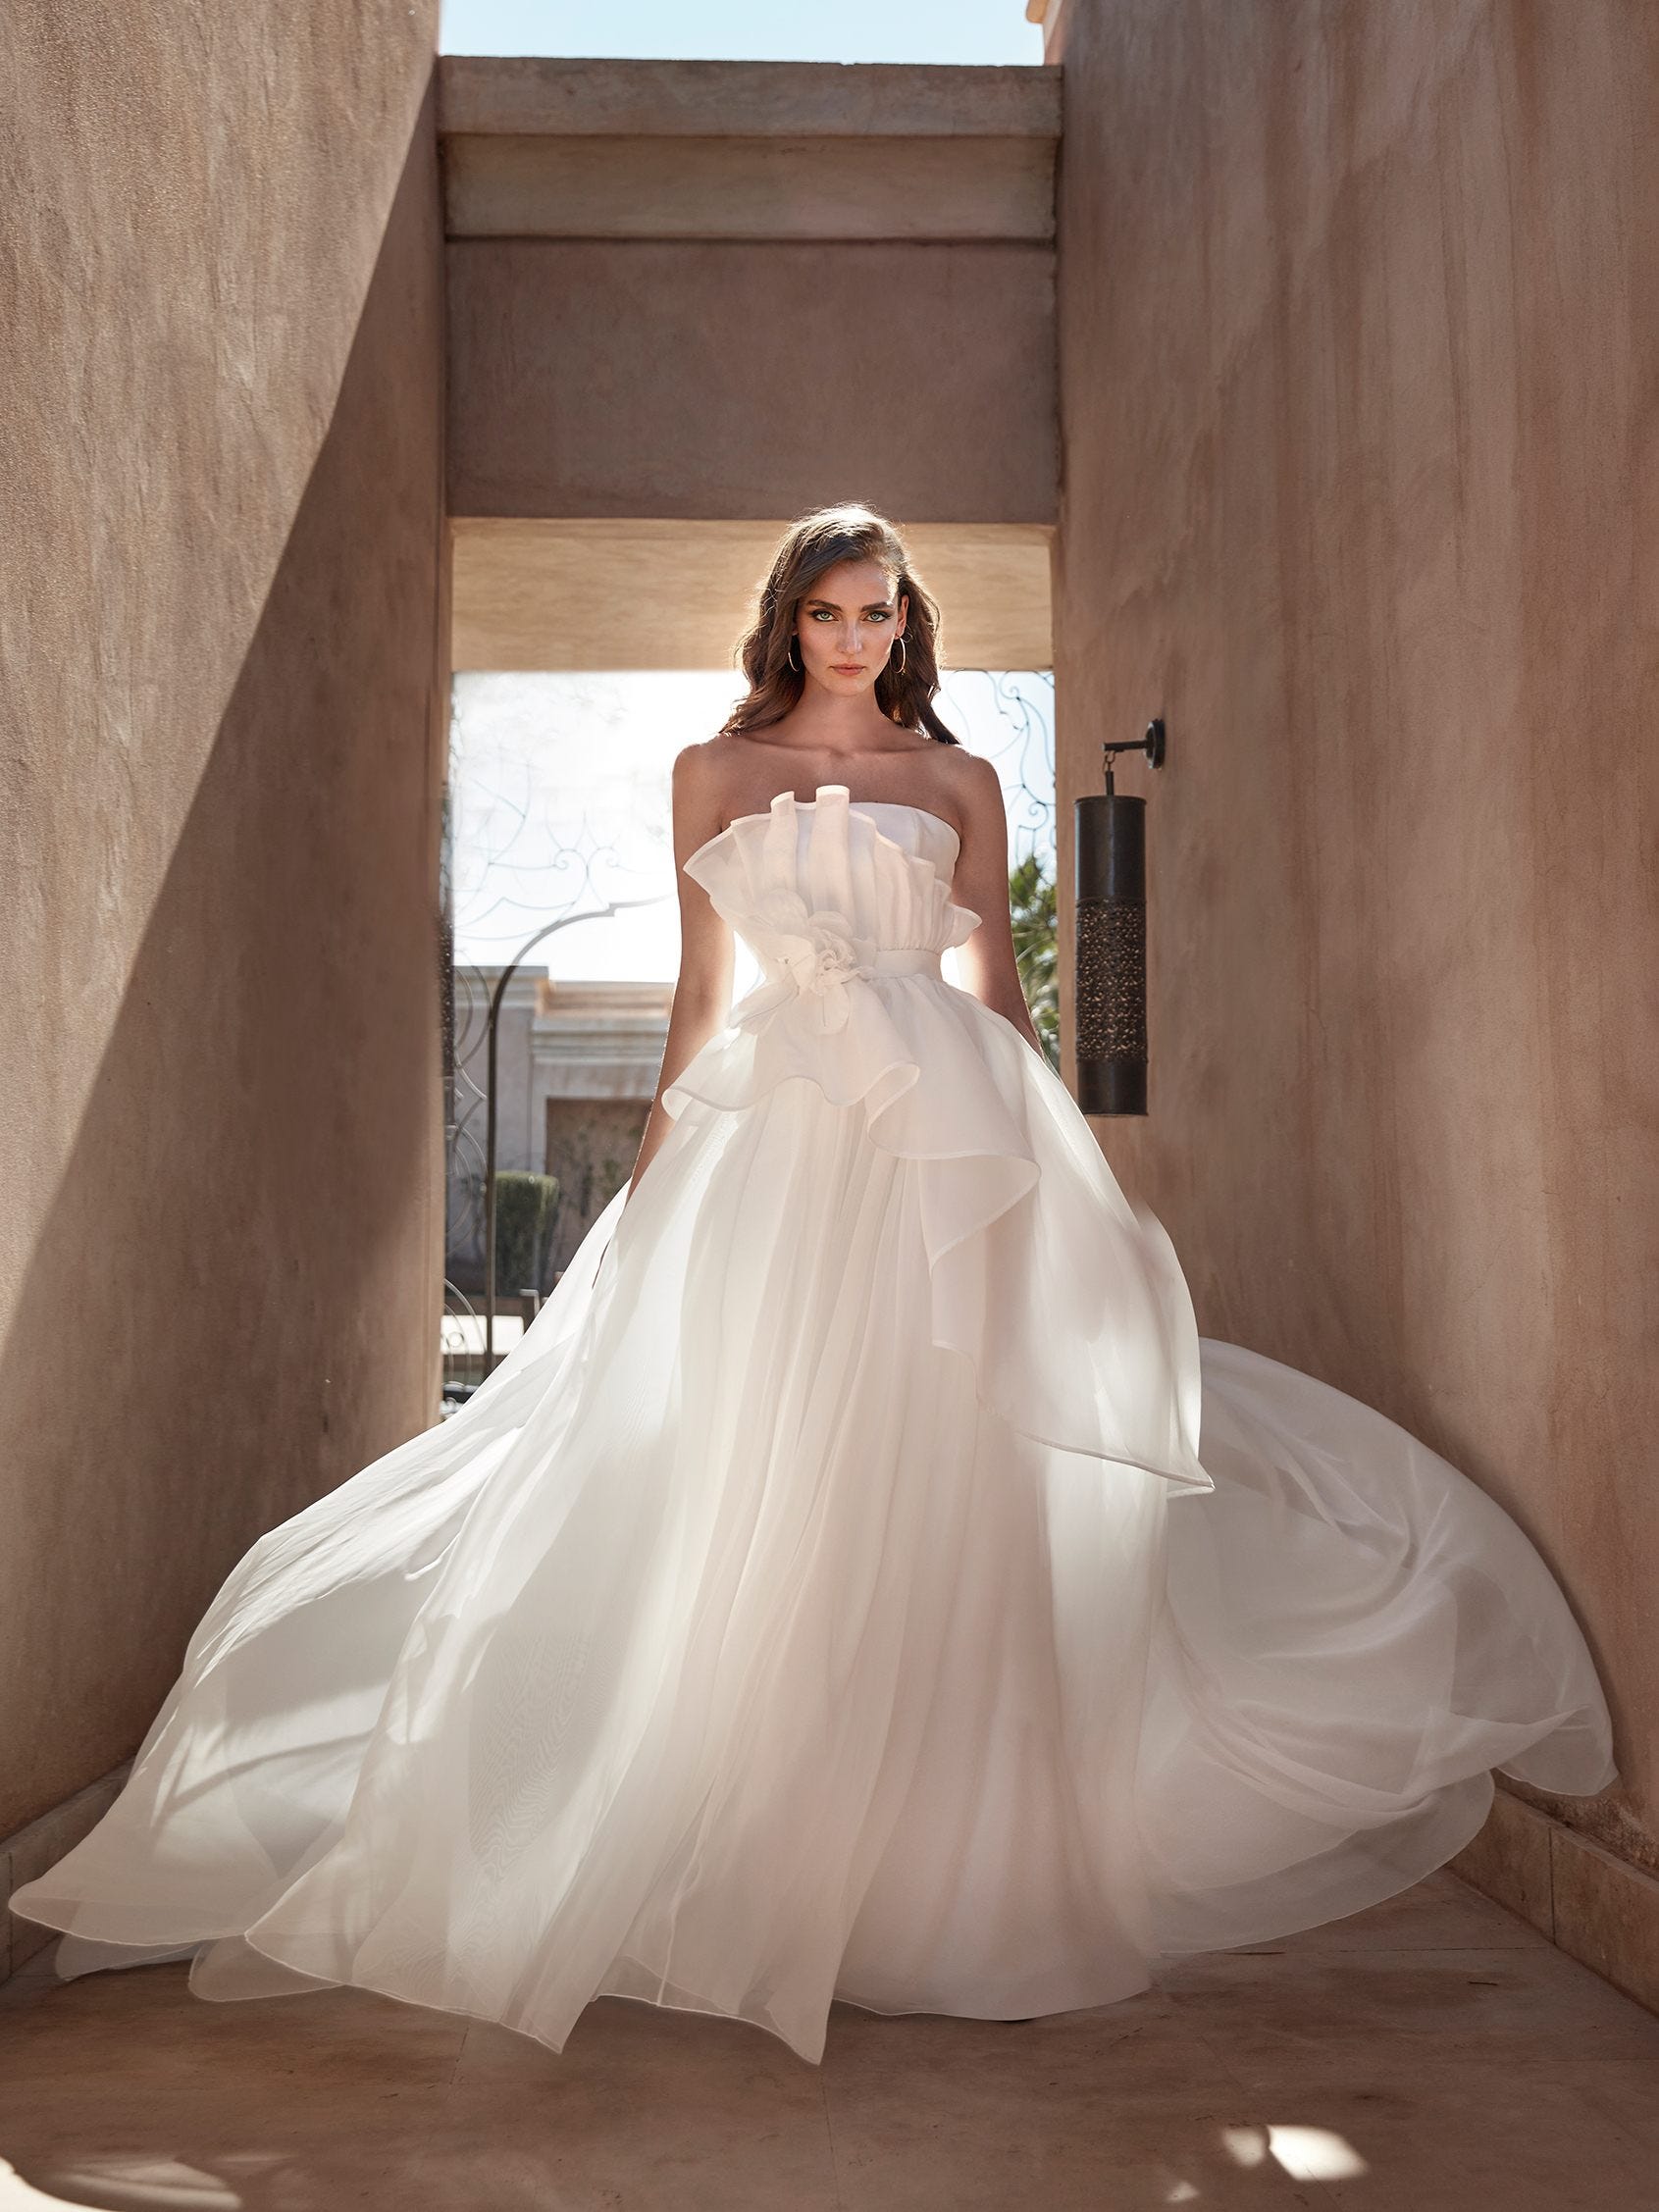 Catia - a grecian inspired wedding dress - WED2B